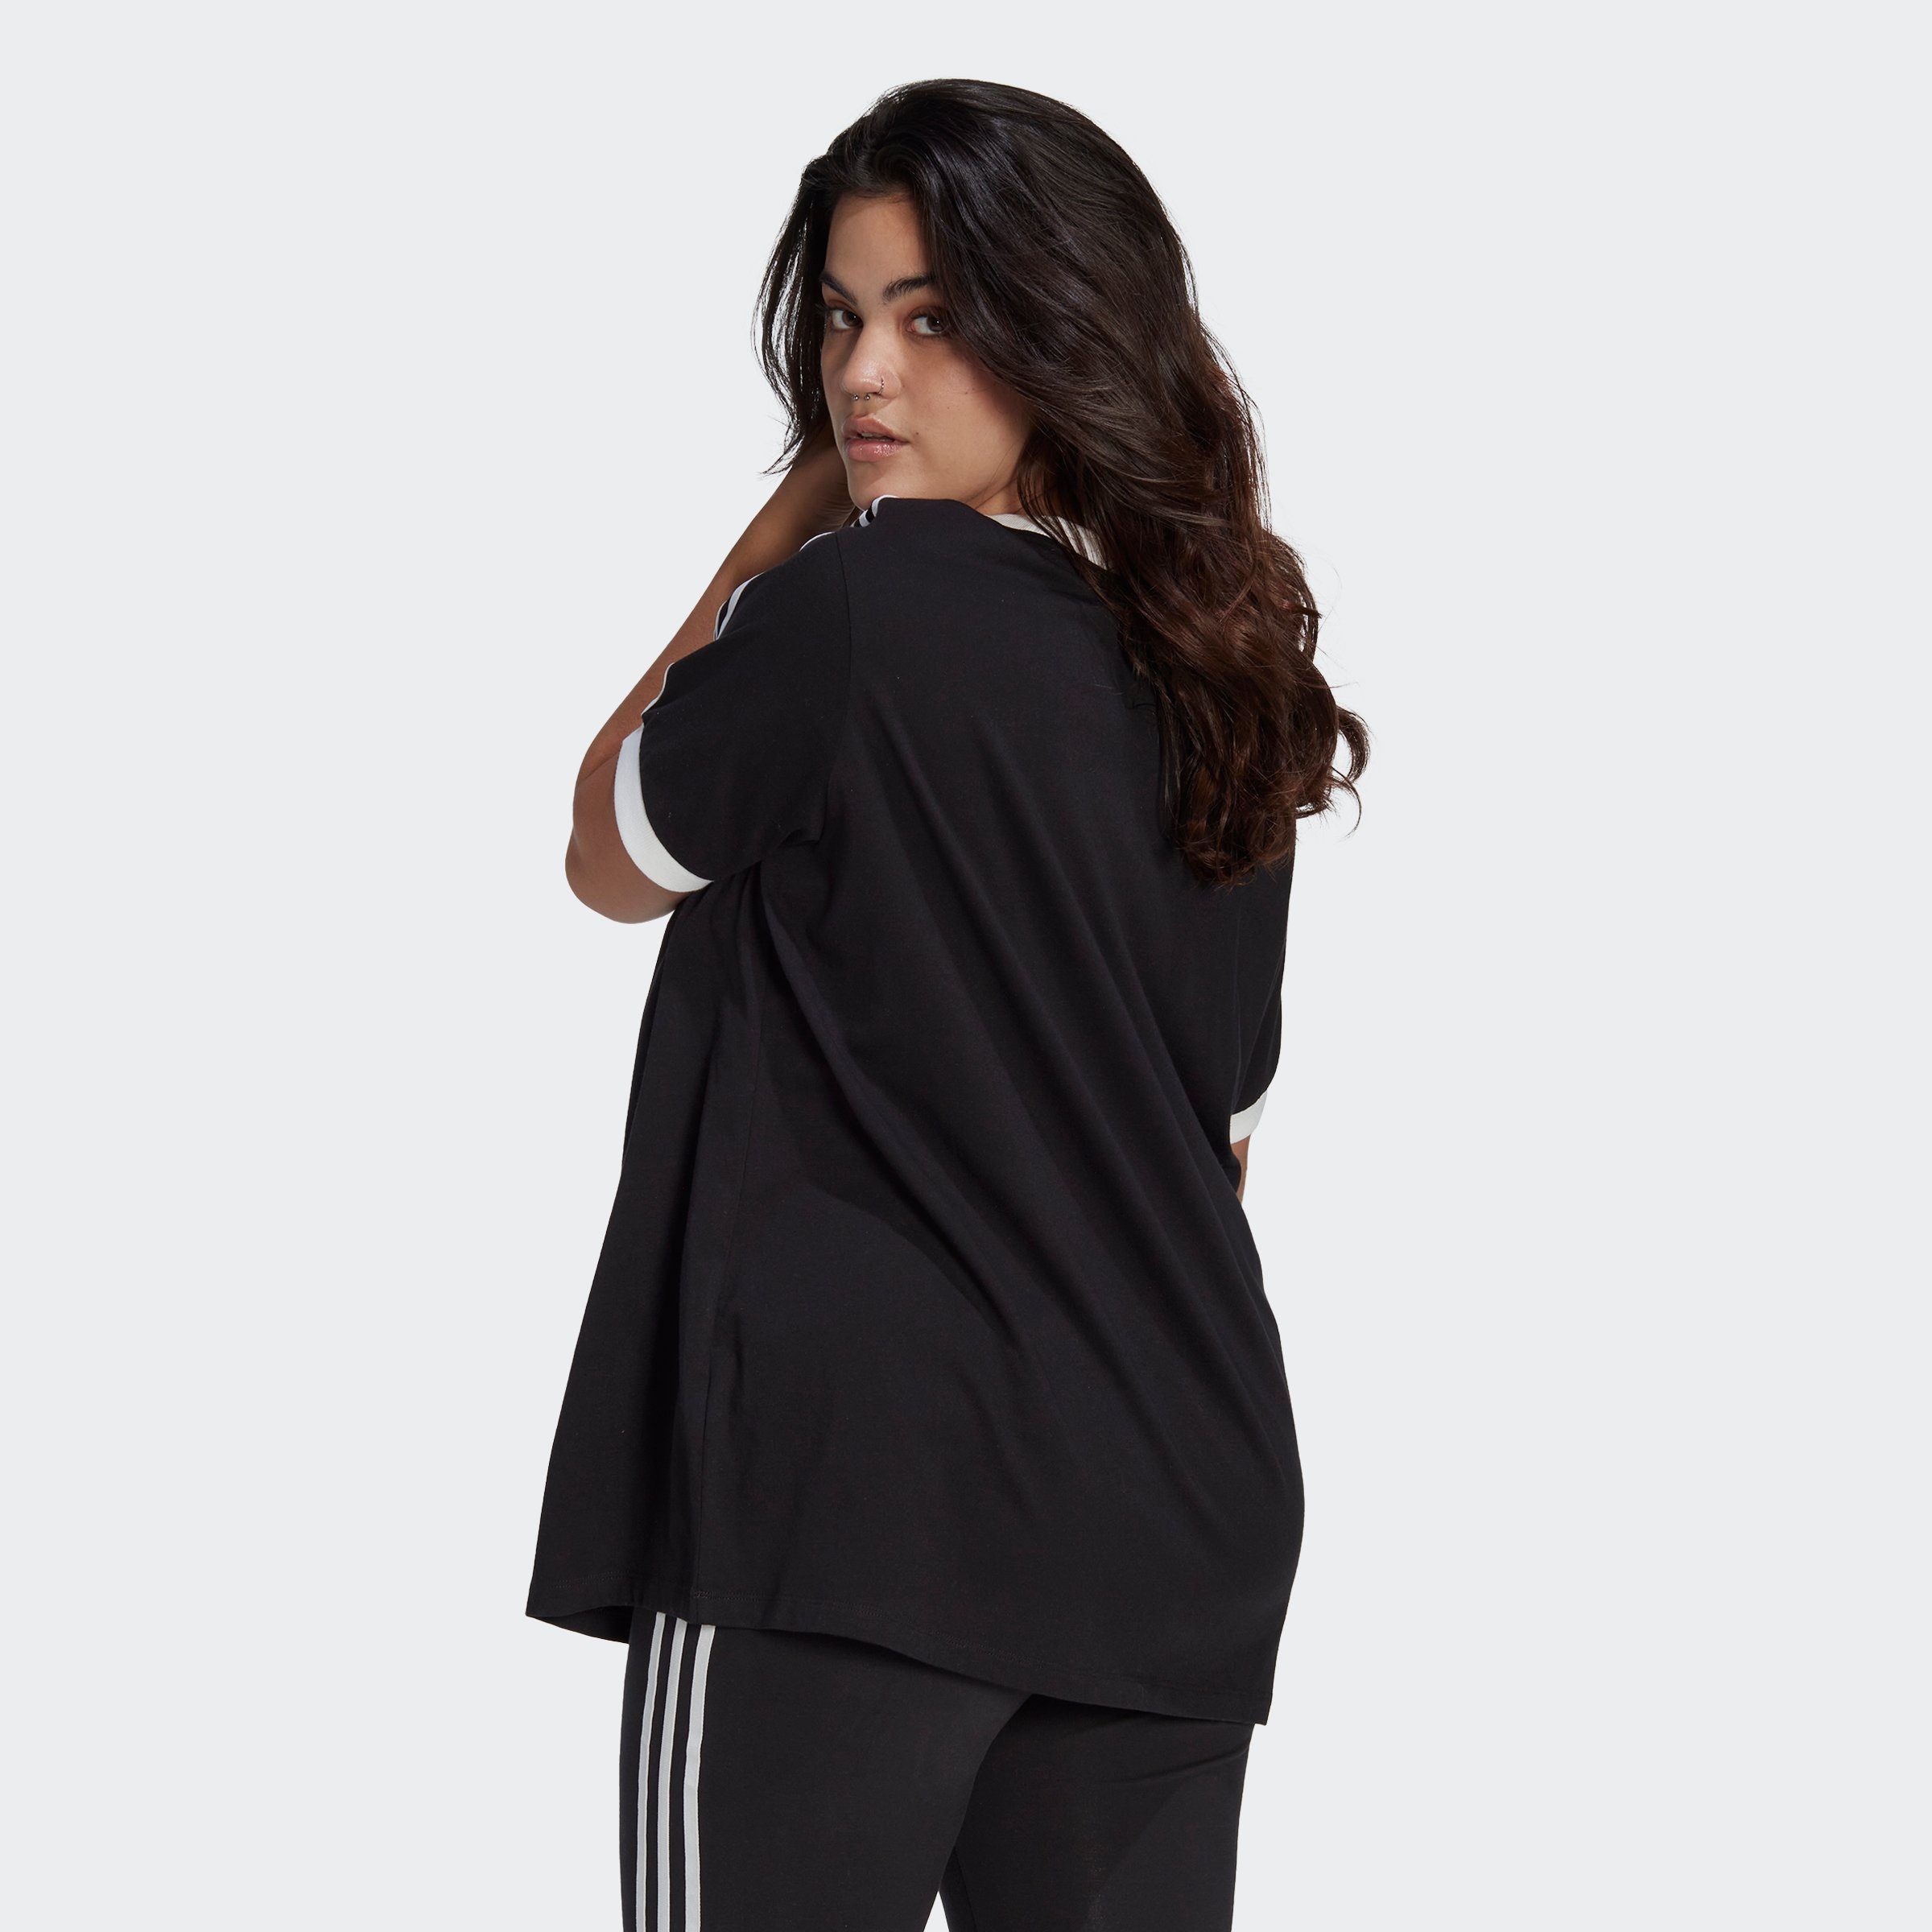 ADICOLOR Originals 3-STREIFEN T-Shirt CLASSICS GRÖSSEN adidas Black – GROSSE